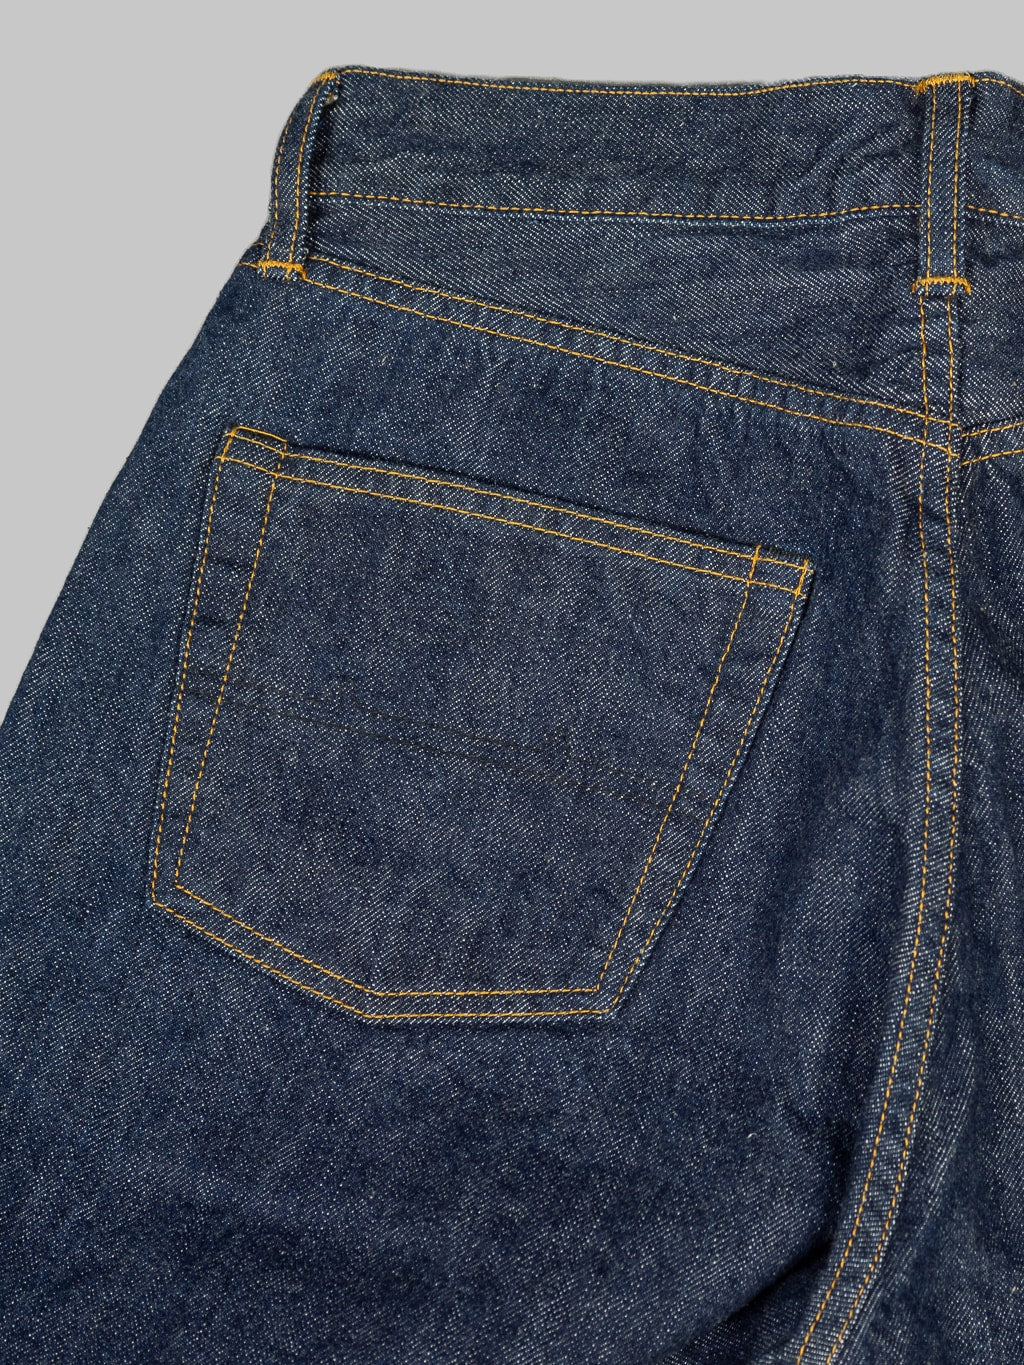 tcb 60s regular straight jeans back pocket